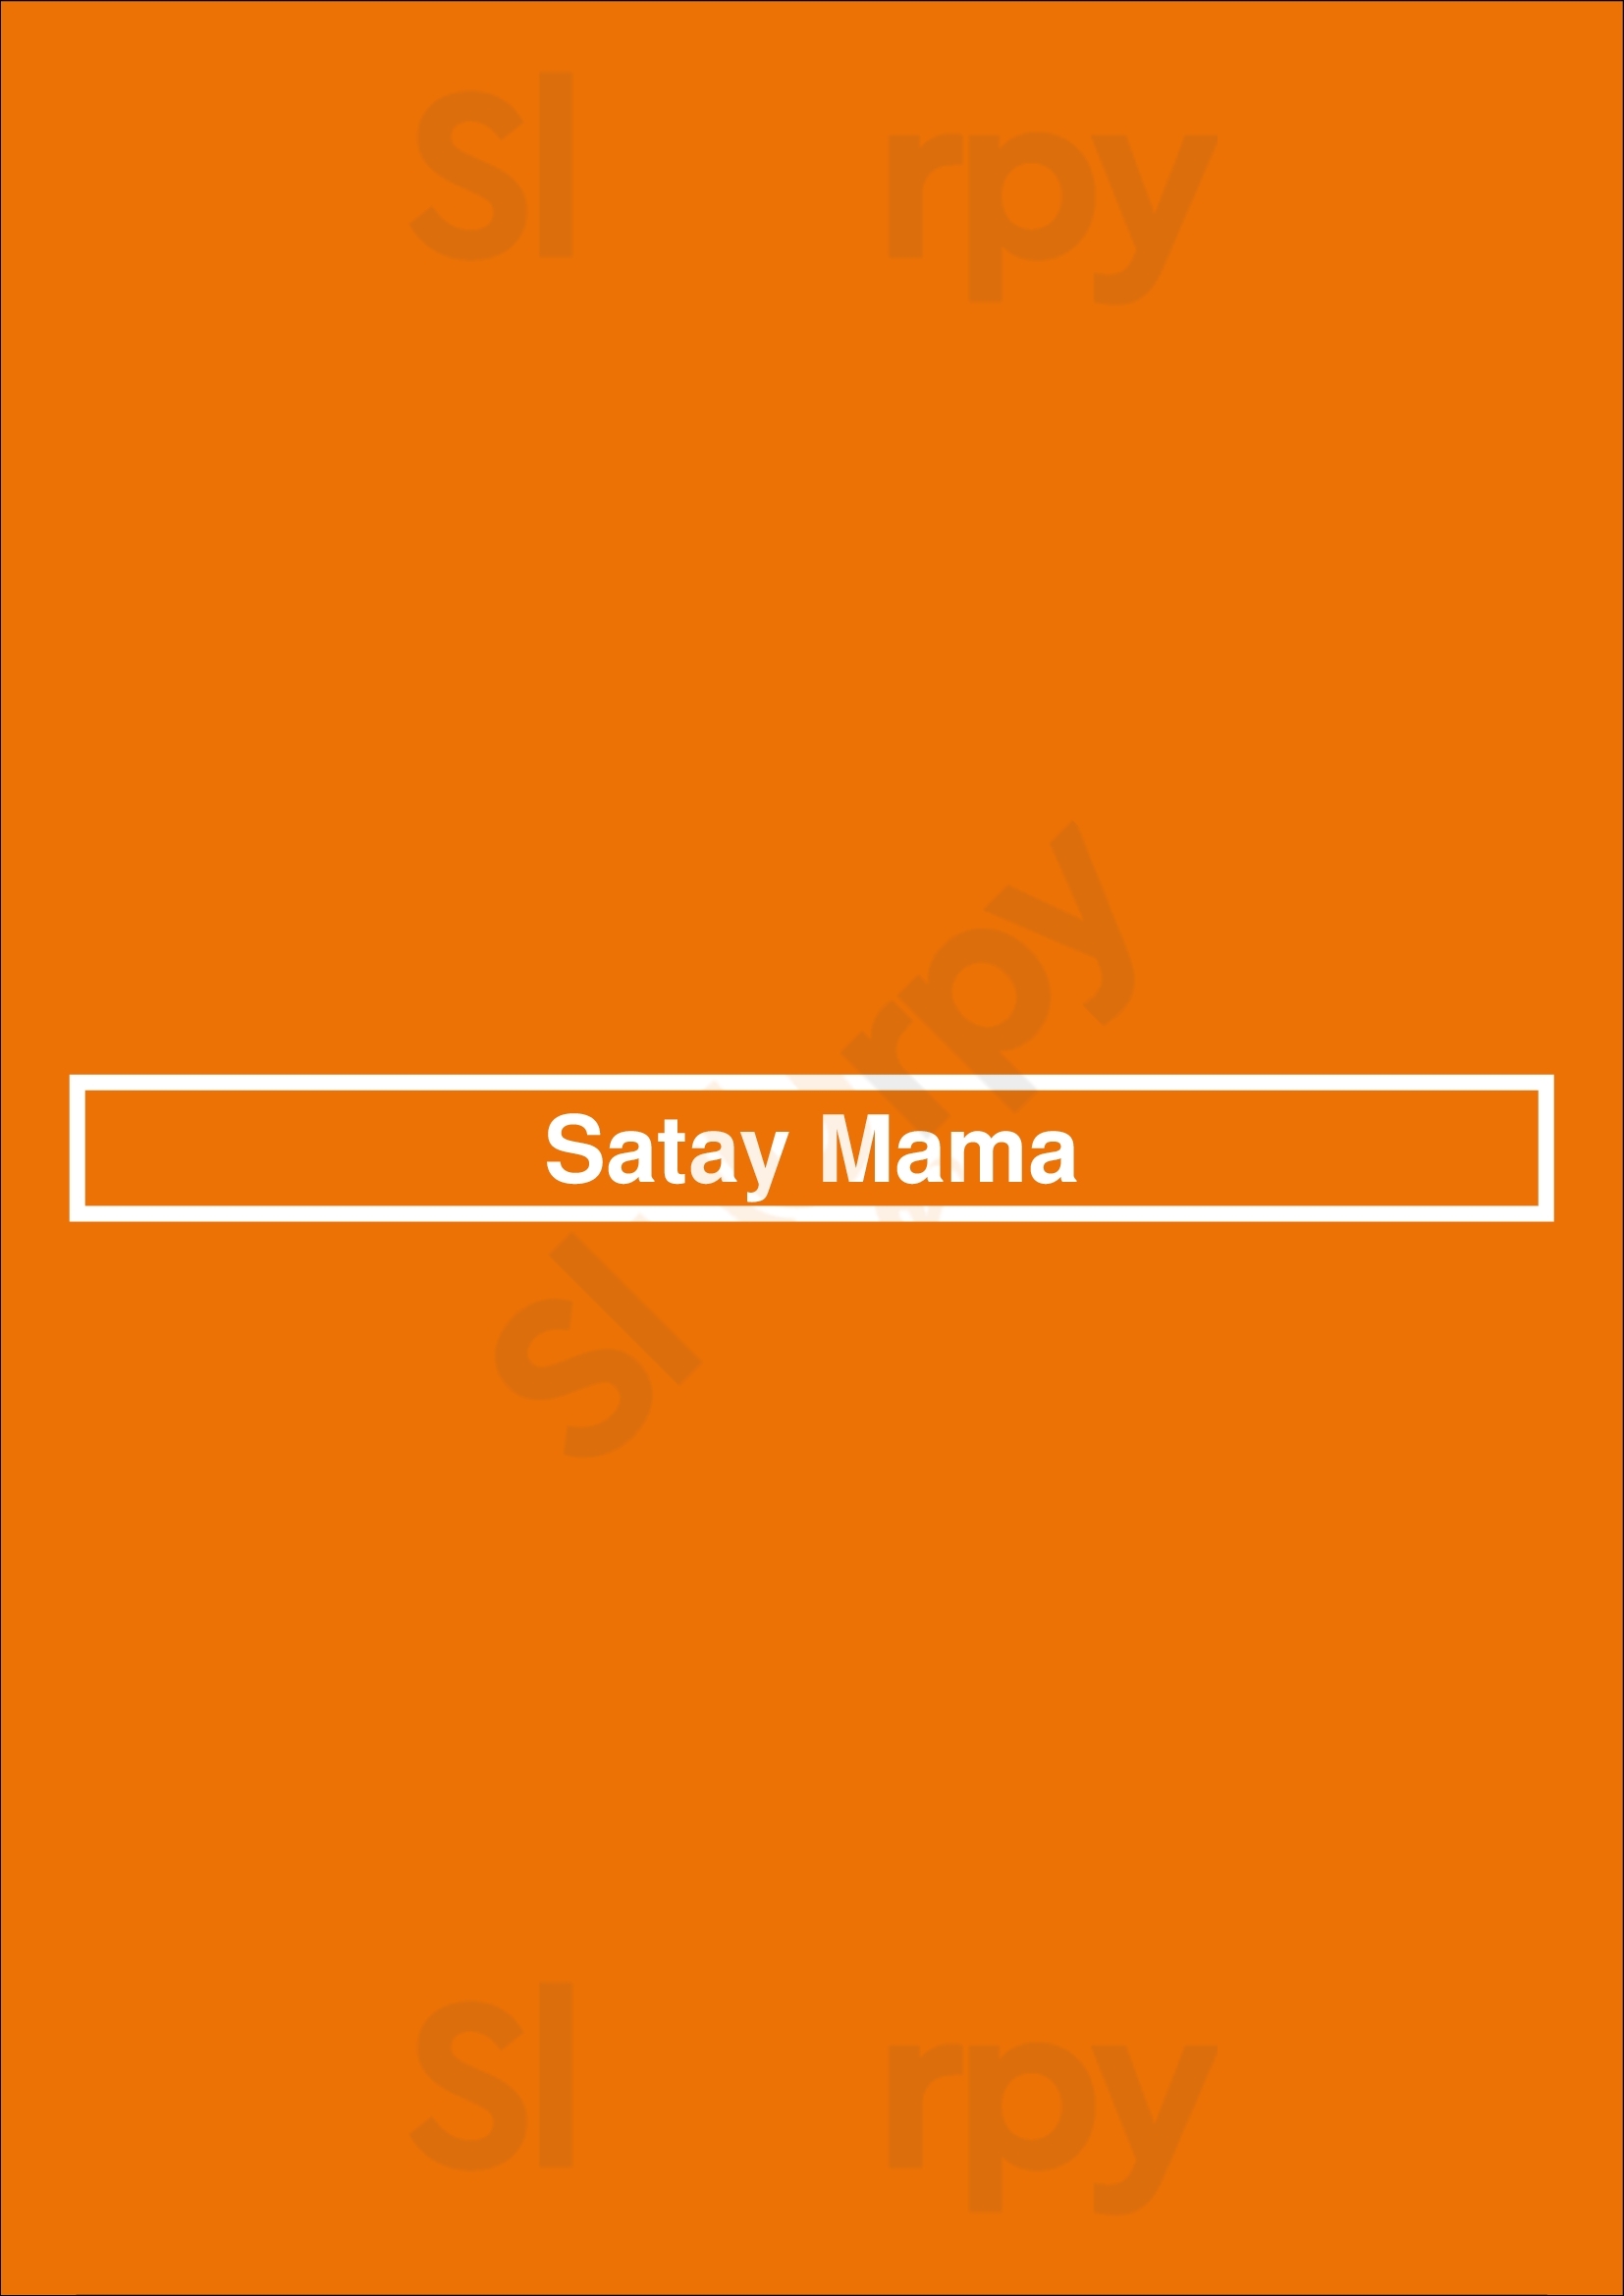 Satay Mama Markham Menu - 1